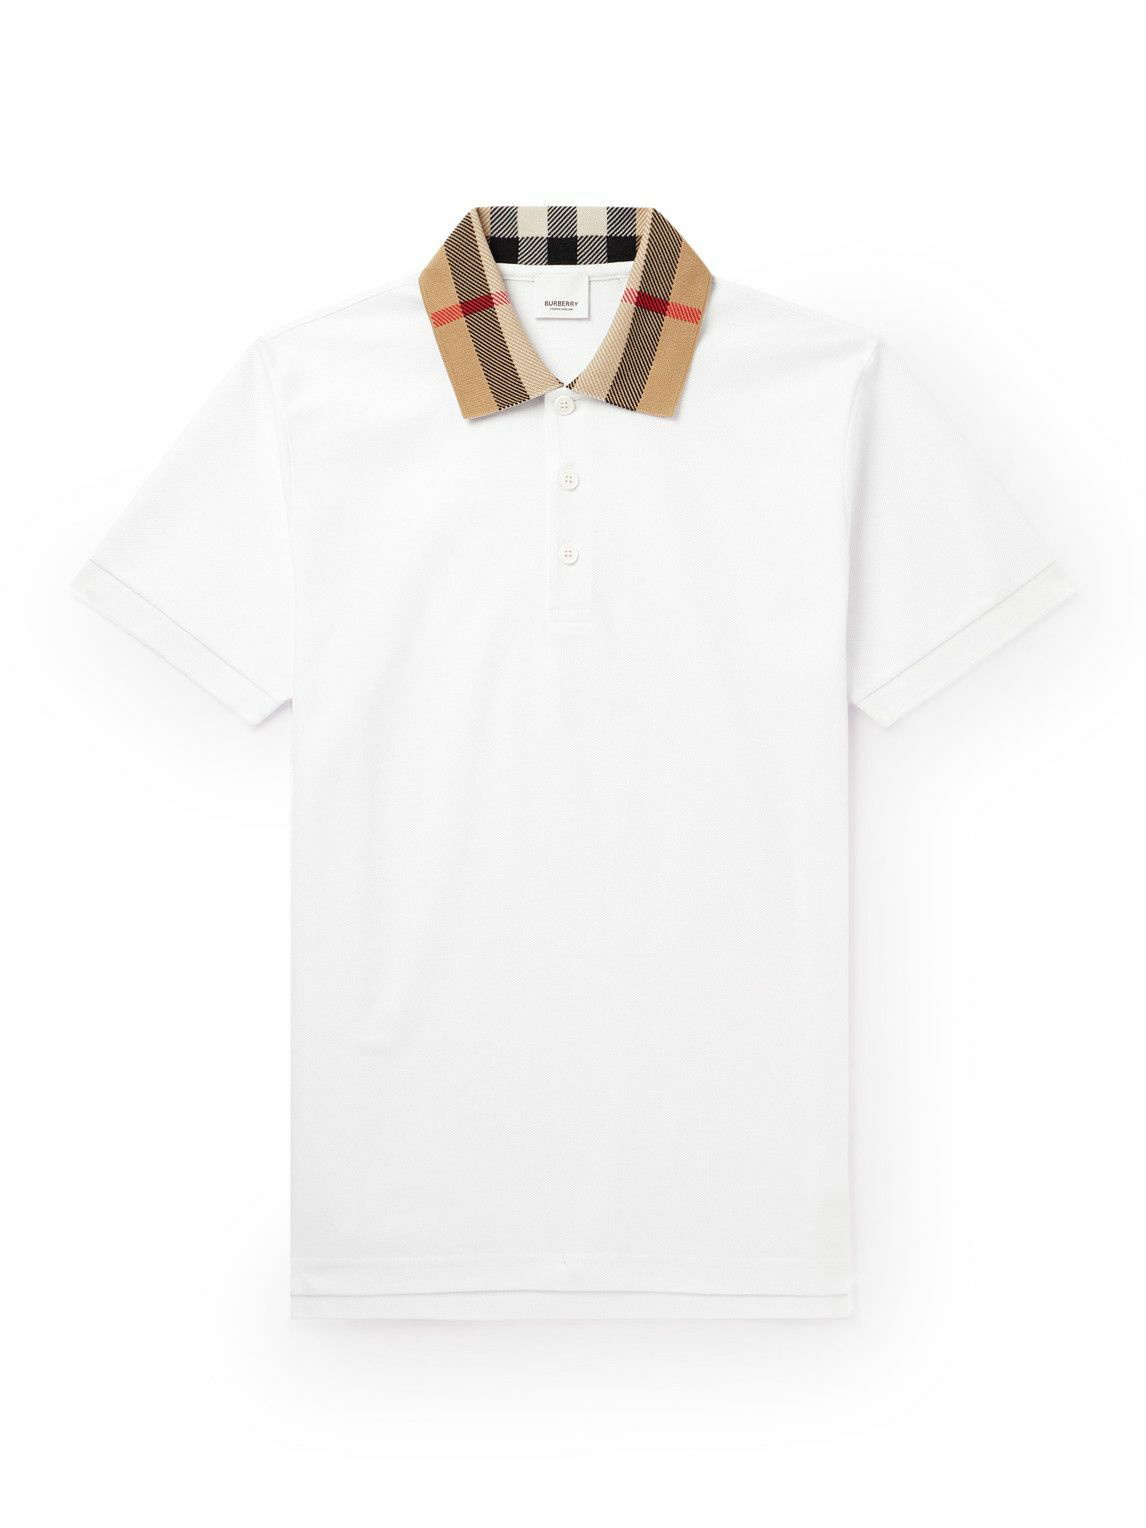 Burberry - Slim-Fit Checked Cotton-Piqué Polo Shirt - White Burberry